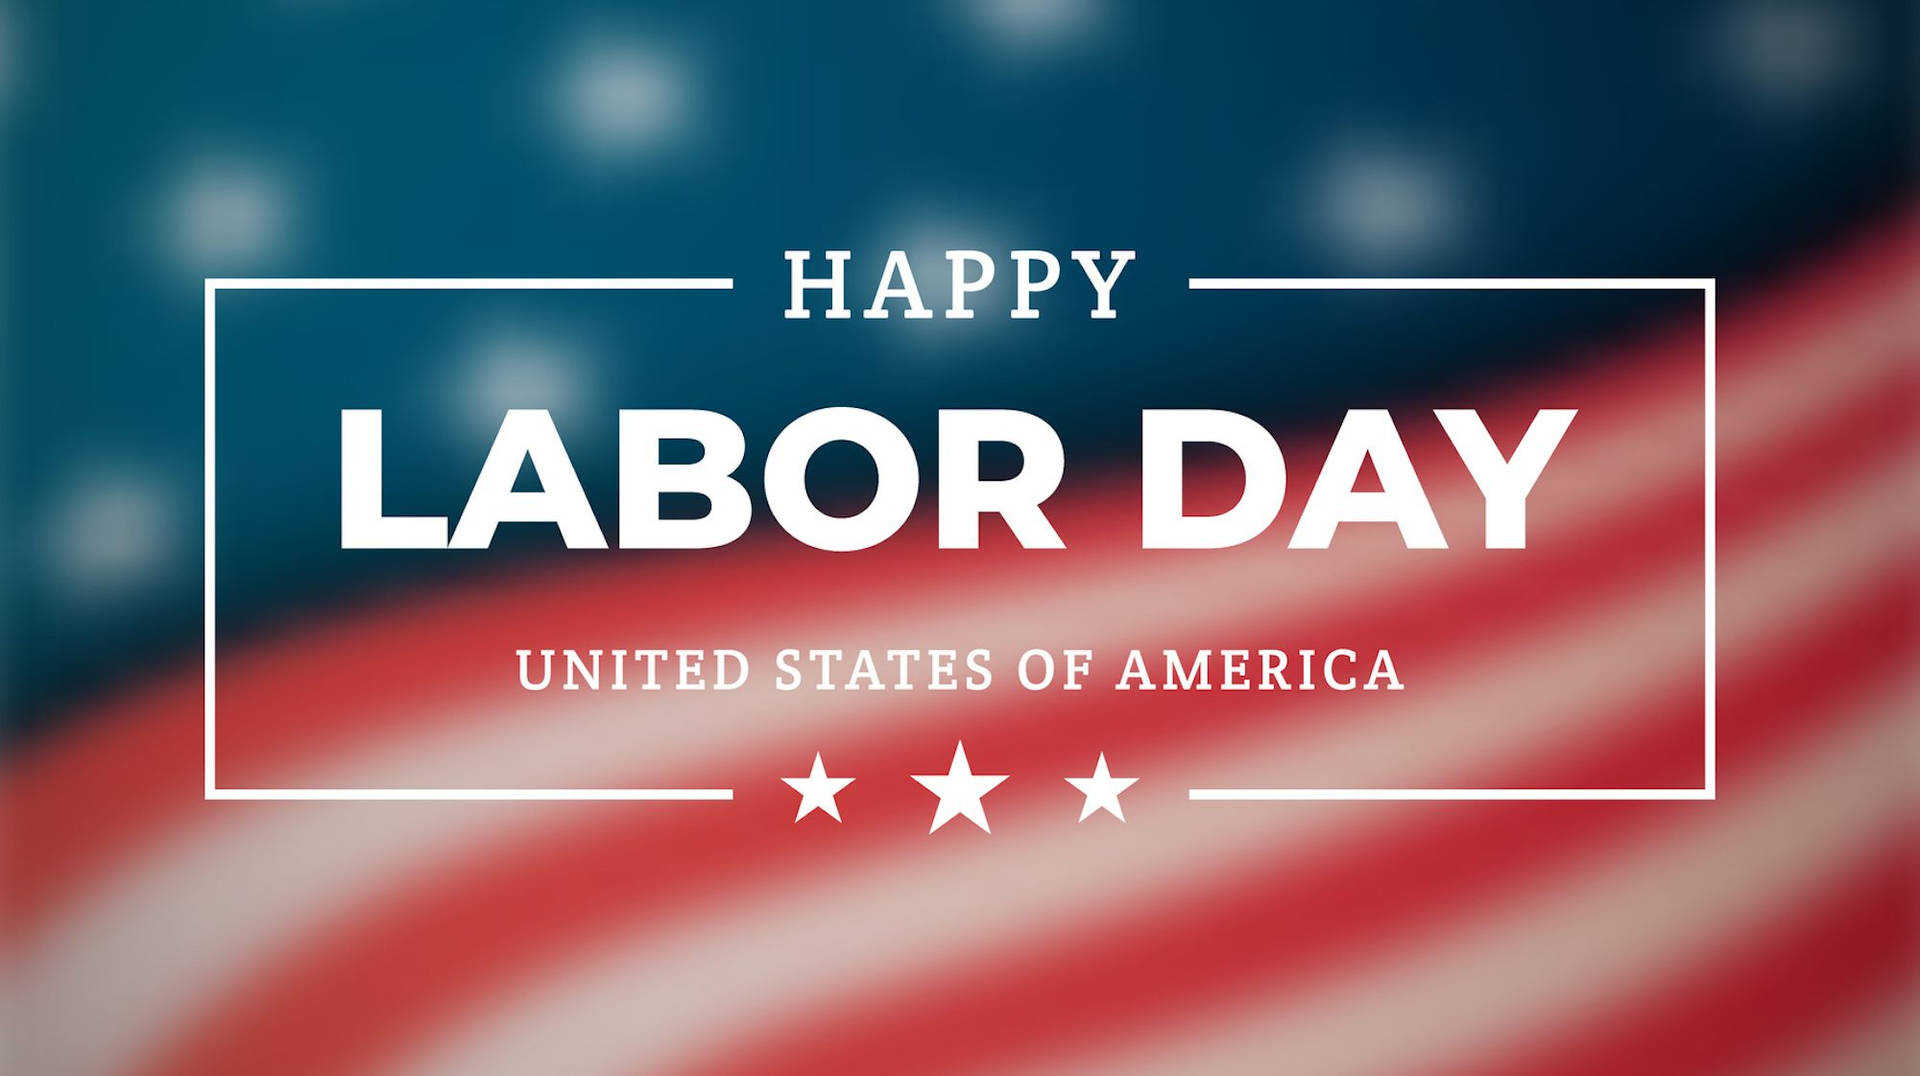 United States Of America Labor Day